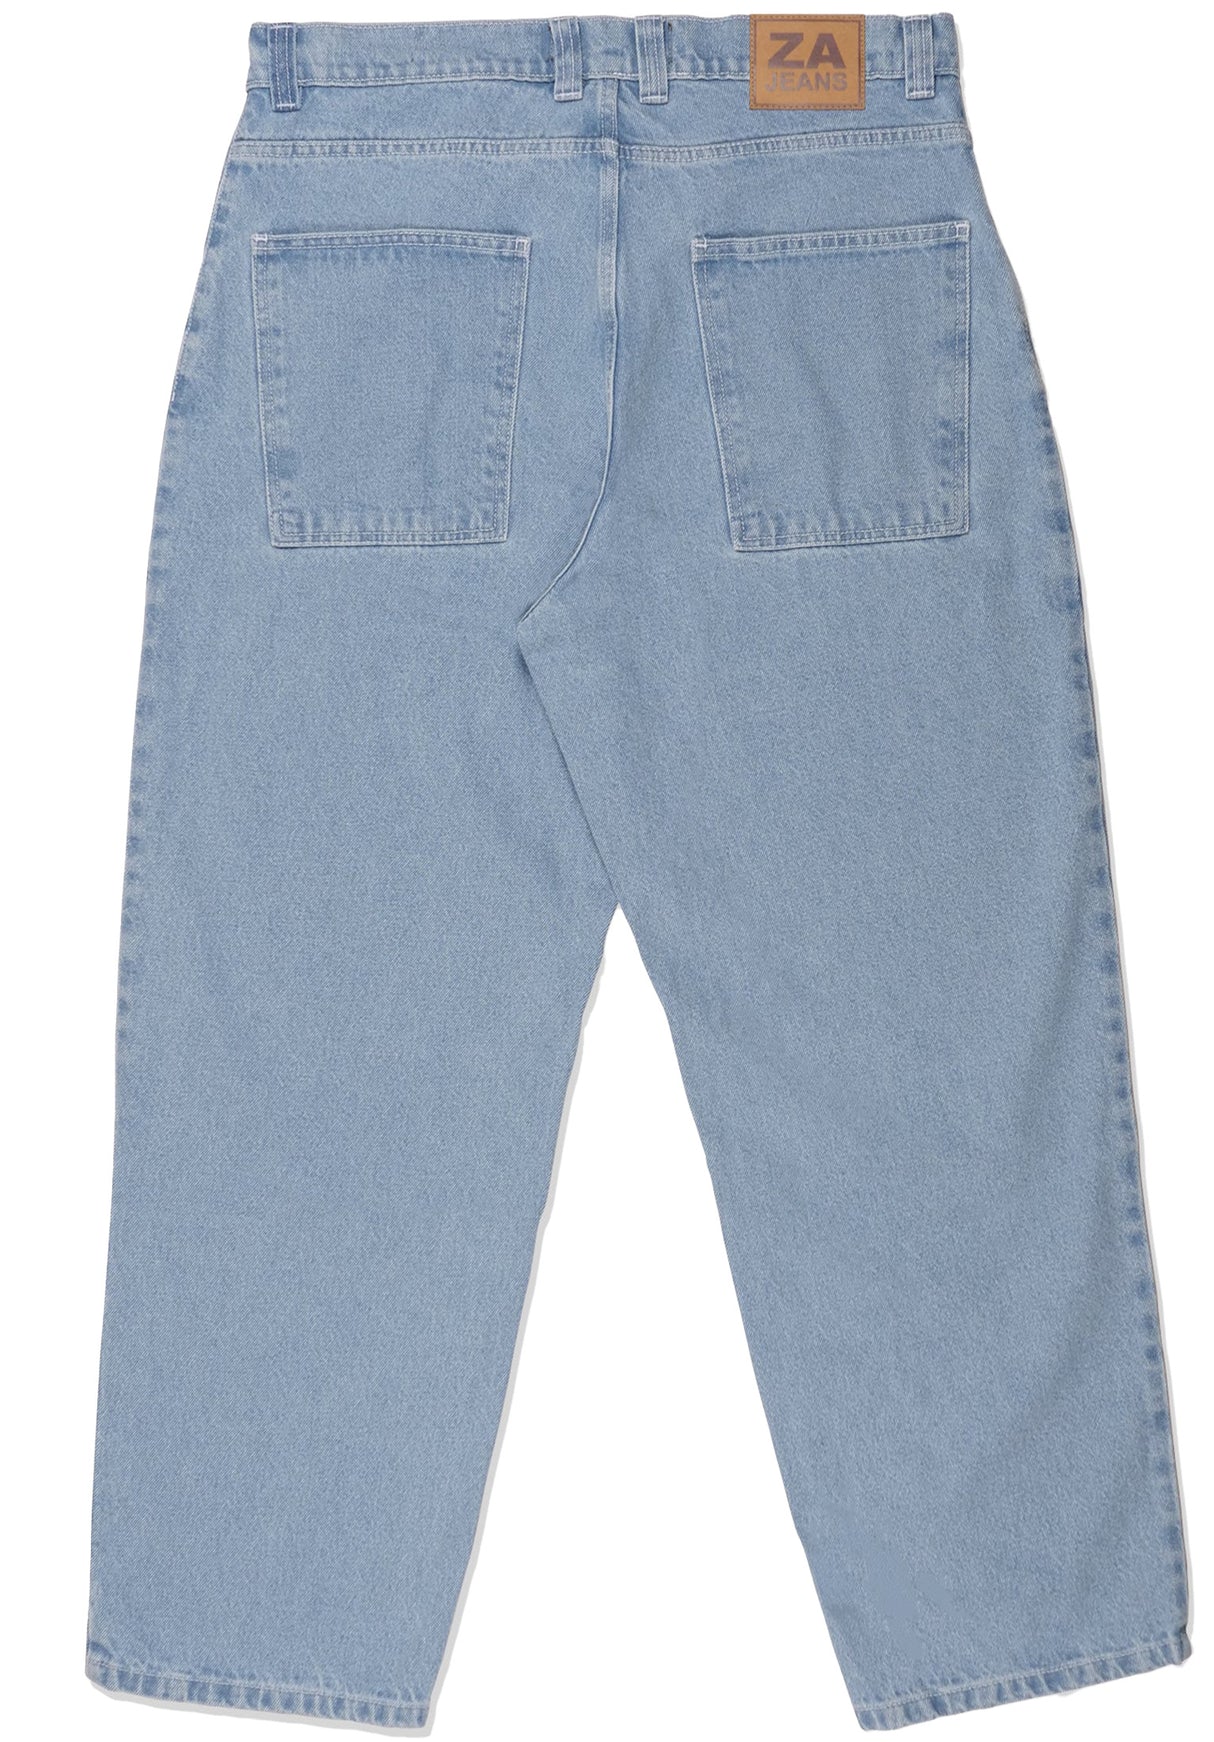 ZA Jeans Baggy Fit washed-blue Rückenansicht